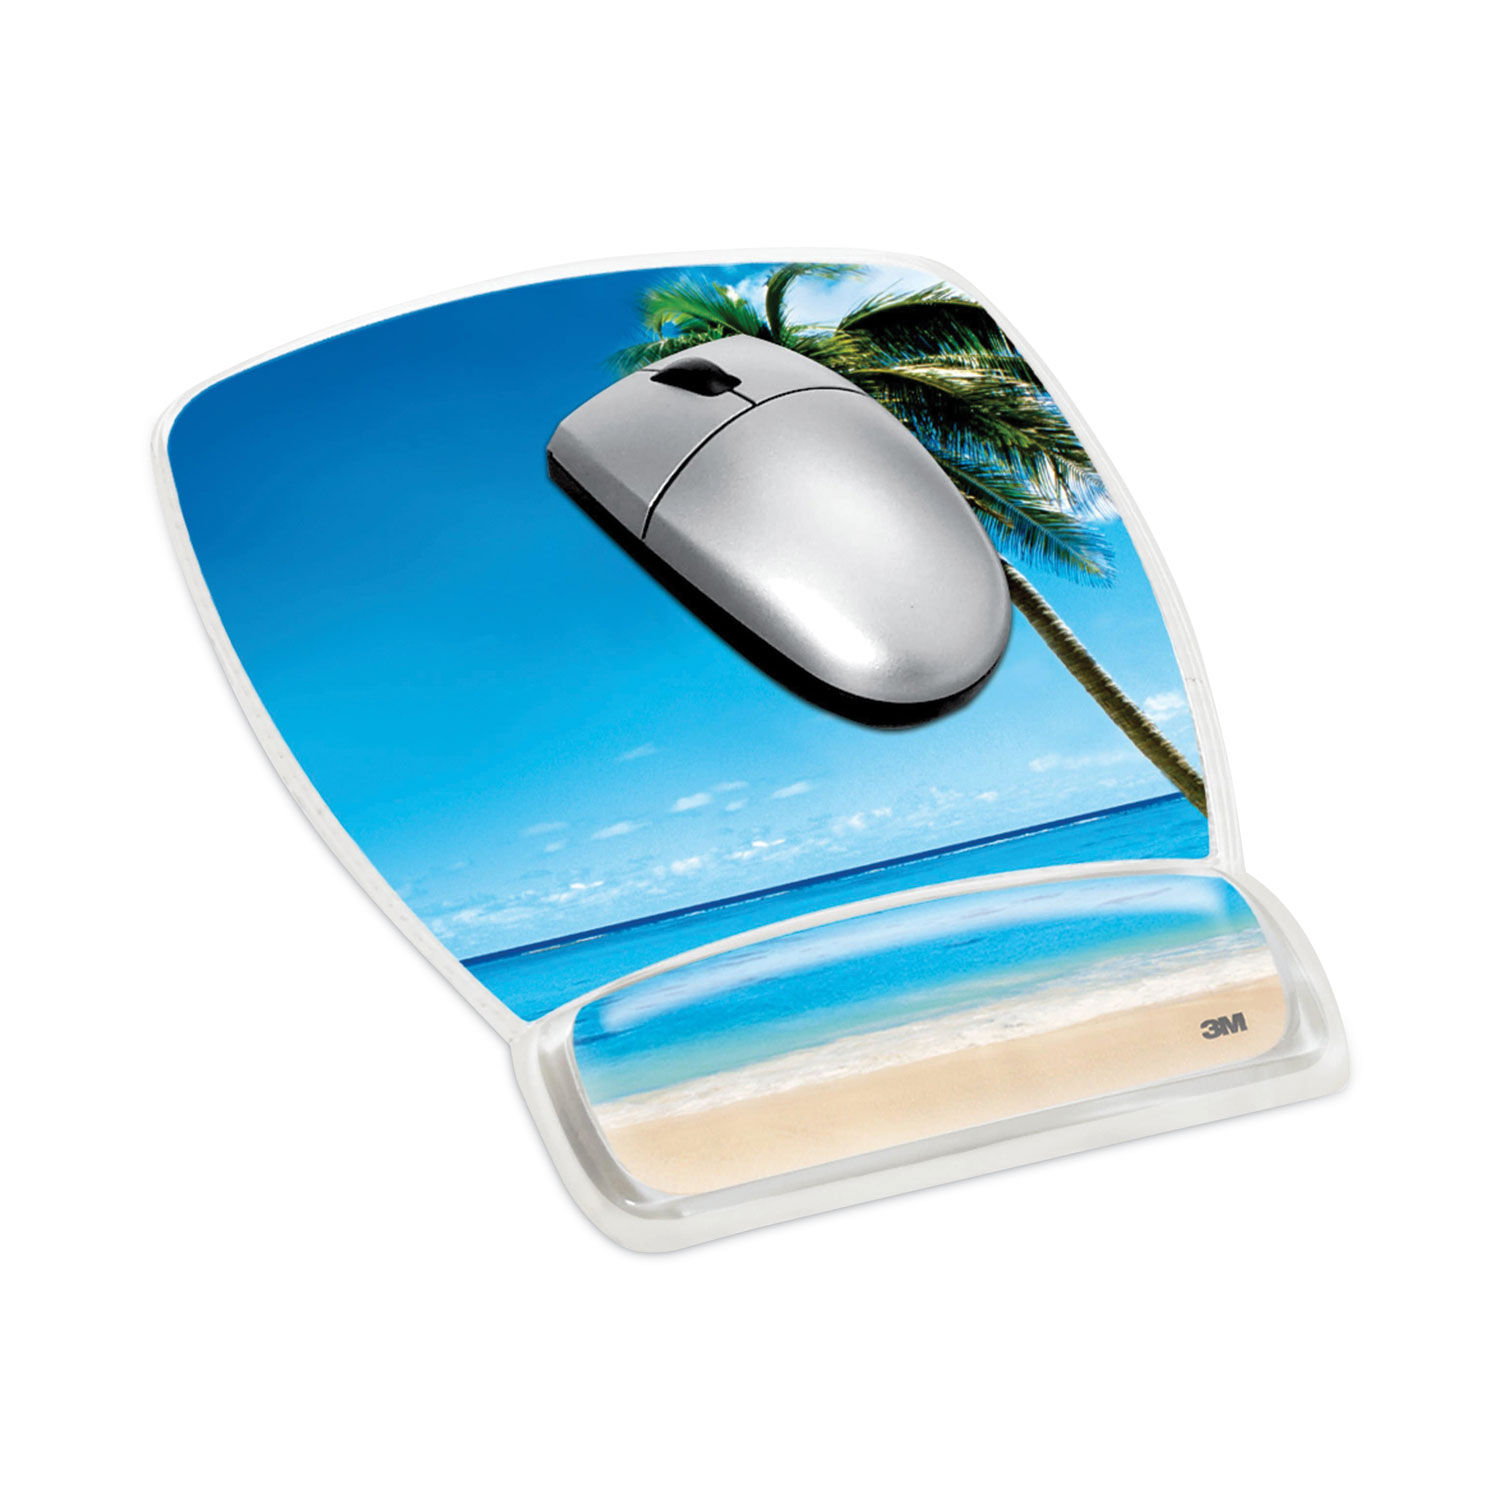 Clear компьютер. Gel Mouse Pad and Wrist rest. Speedlink Vellu Gel Mousepad. Clear Design.